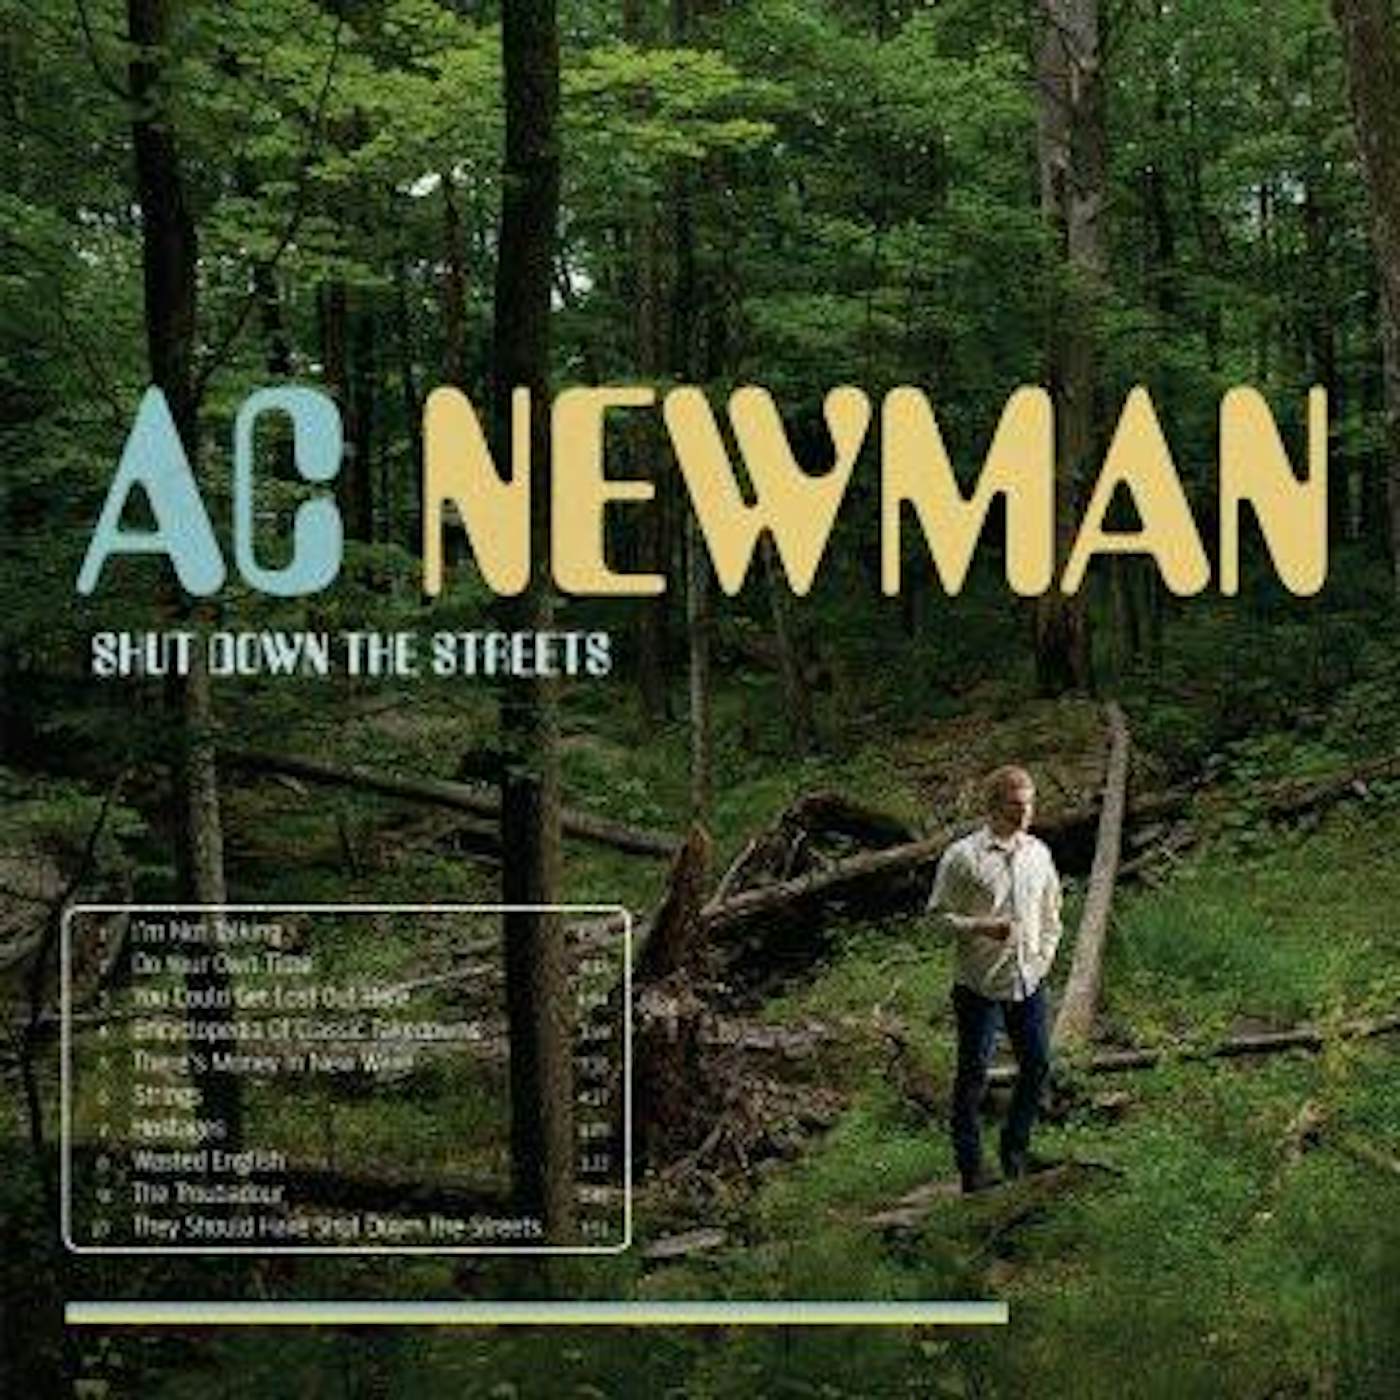 A.C. Newman Shut Down The Streets CD